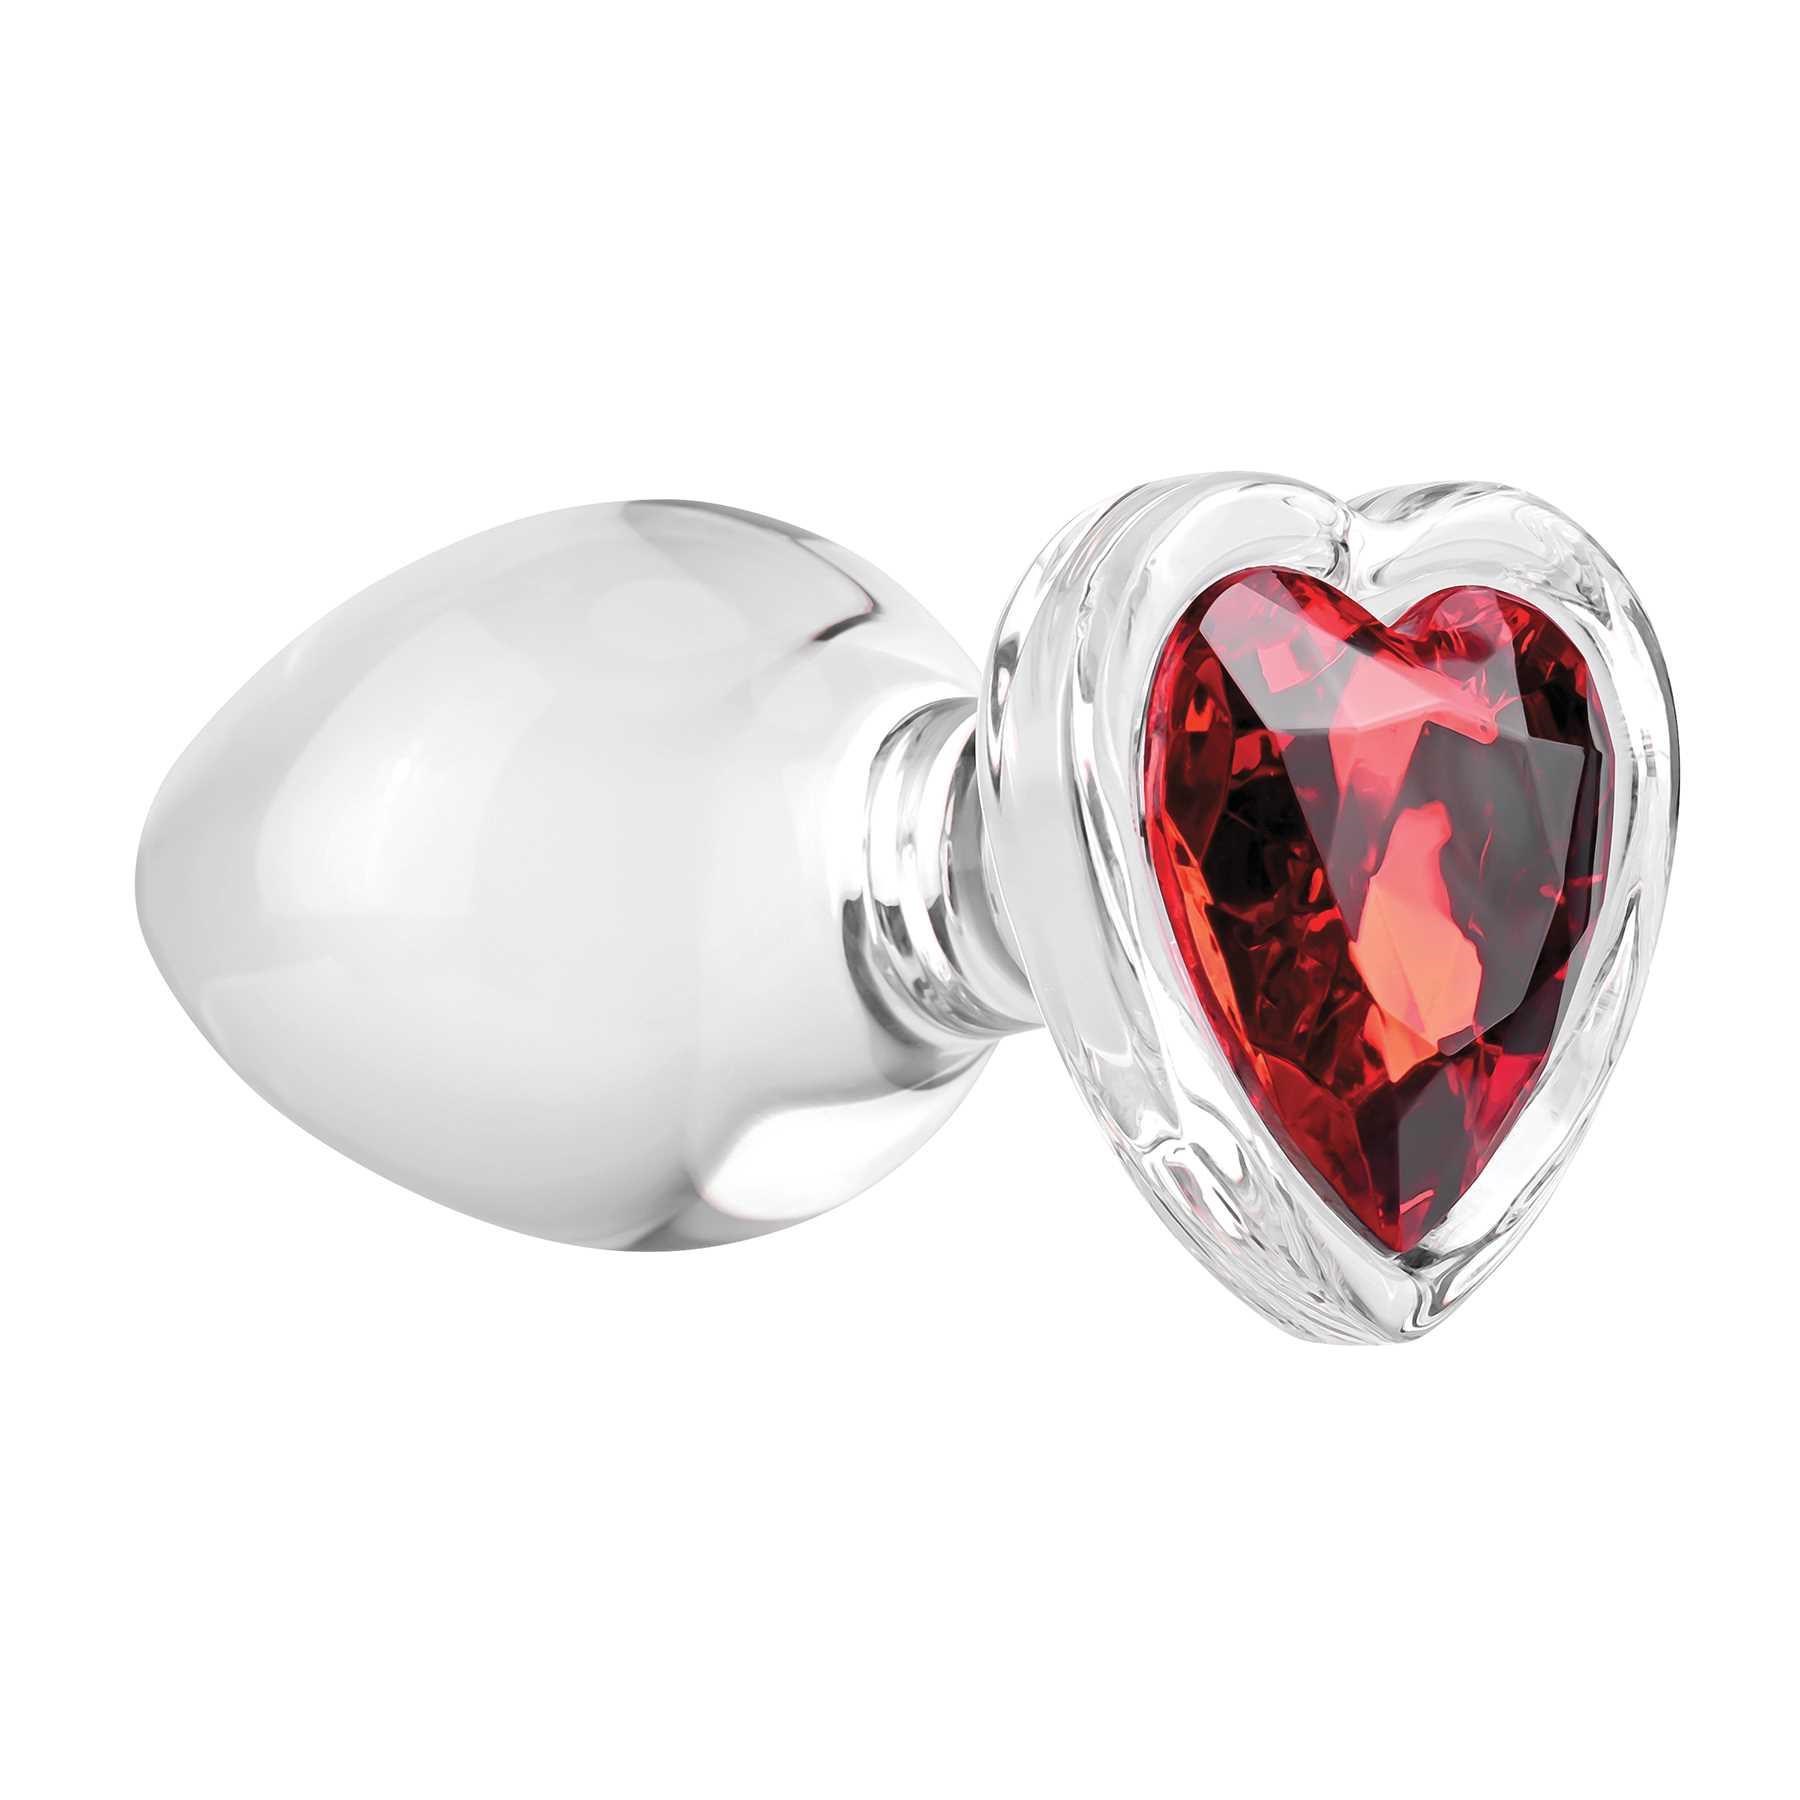 Red Heart Gem Glass Plug large image 2